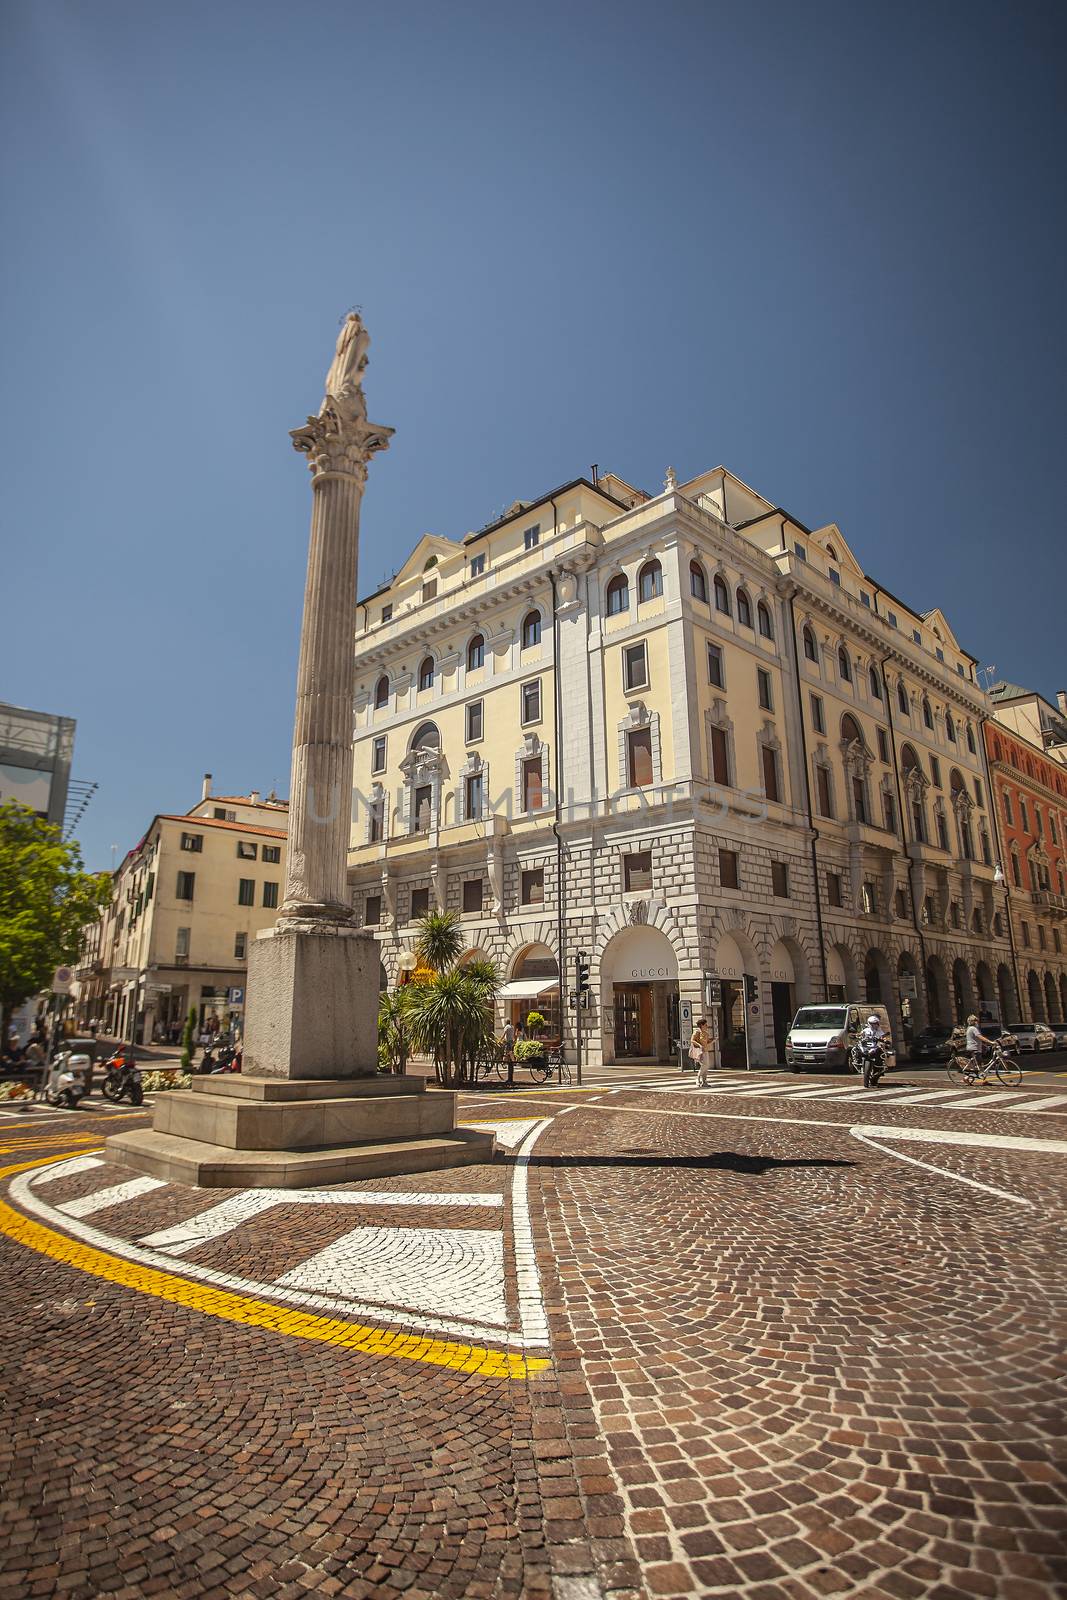 Garibaldi square in Padua, Italy 2 by pippocarlot